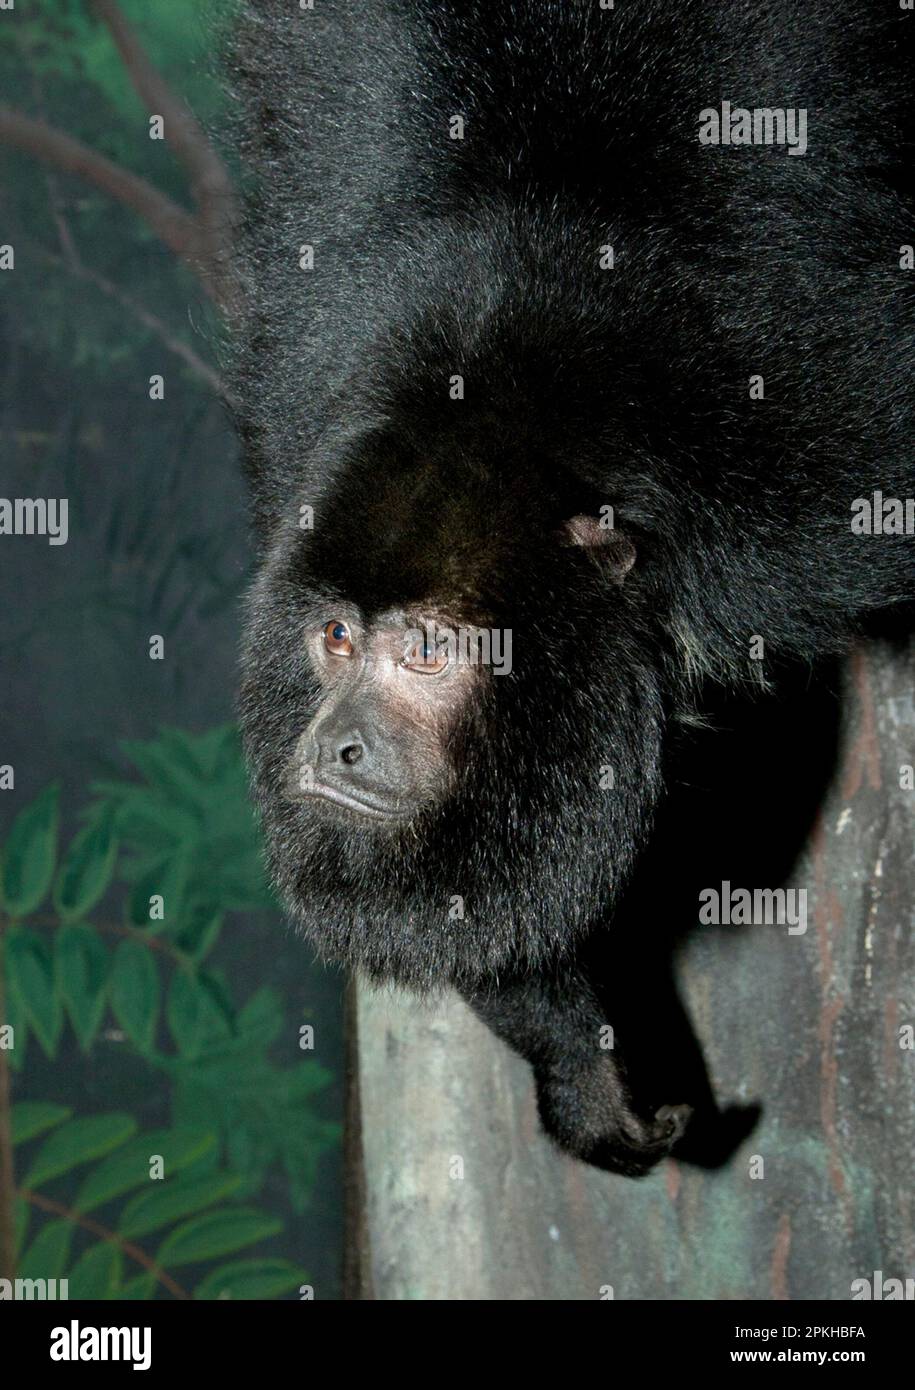 Closeup of a male black howler monkey in a tree, Alouatta caraya, Smithsonian National Zoological Park, Washington, DC, USA Stock Photo